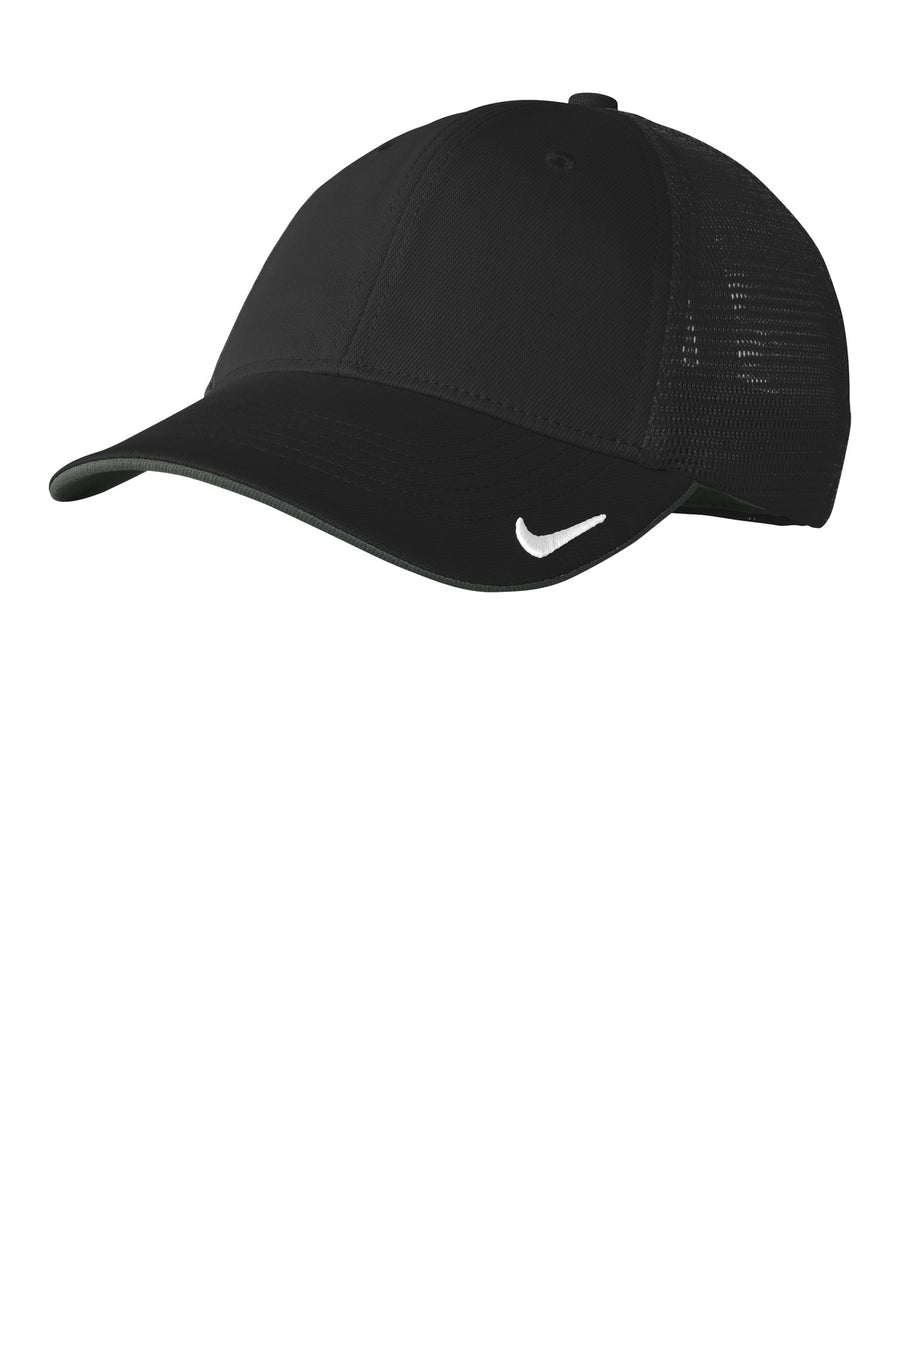 Nike Dri-FIT Mesh Back Cap.